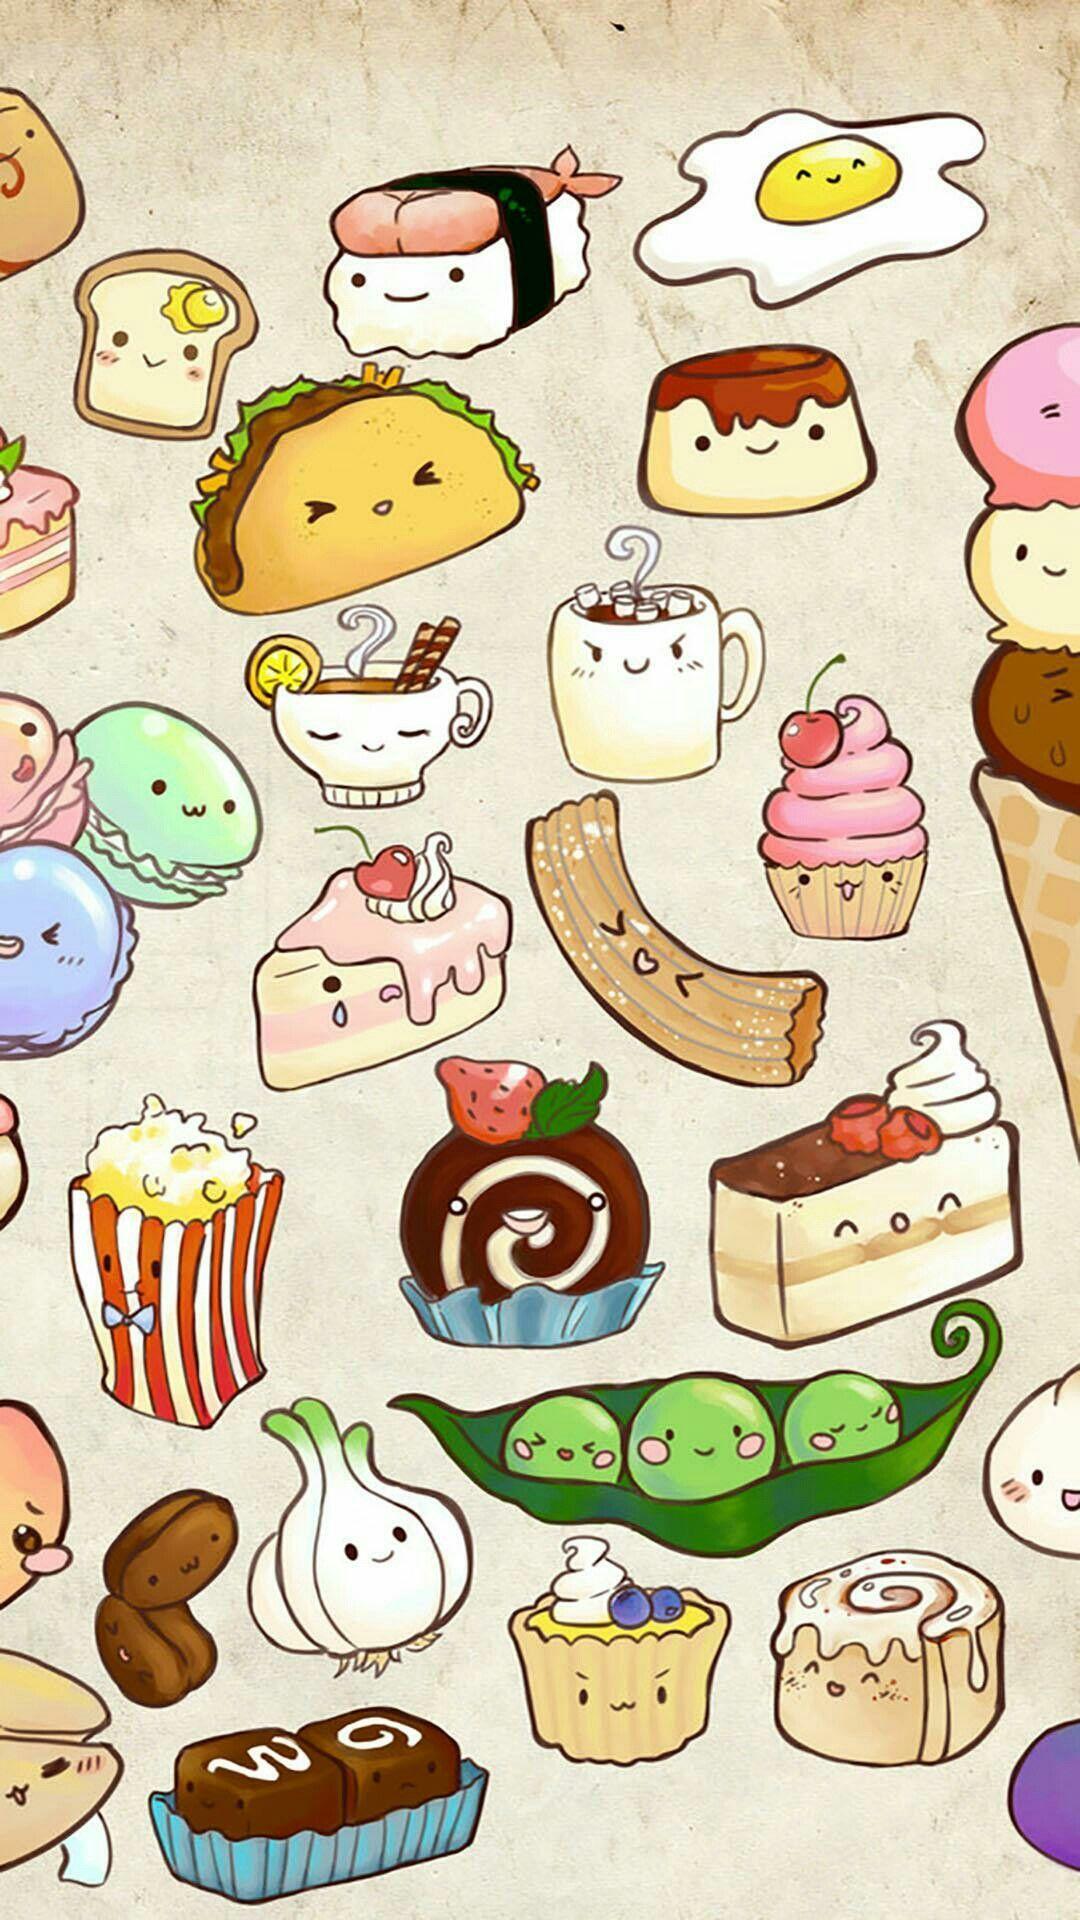 Papéis de parede. Cute food wallpaper, Food wallpaper, Cute food drawings